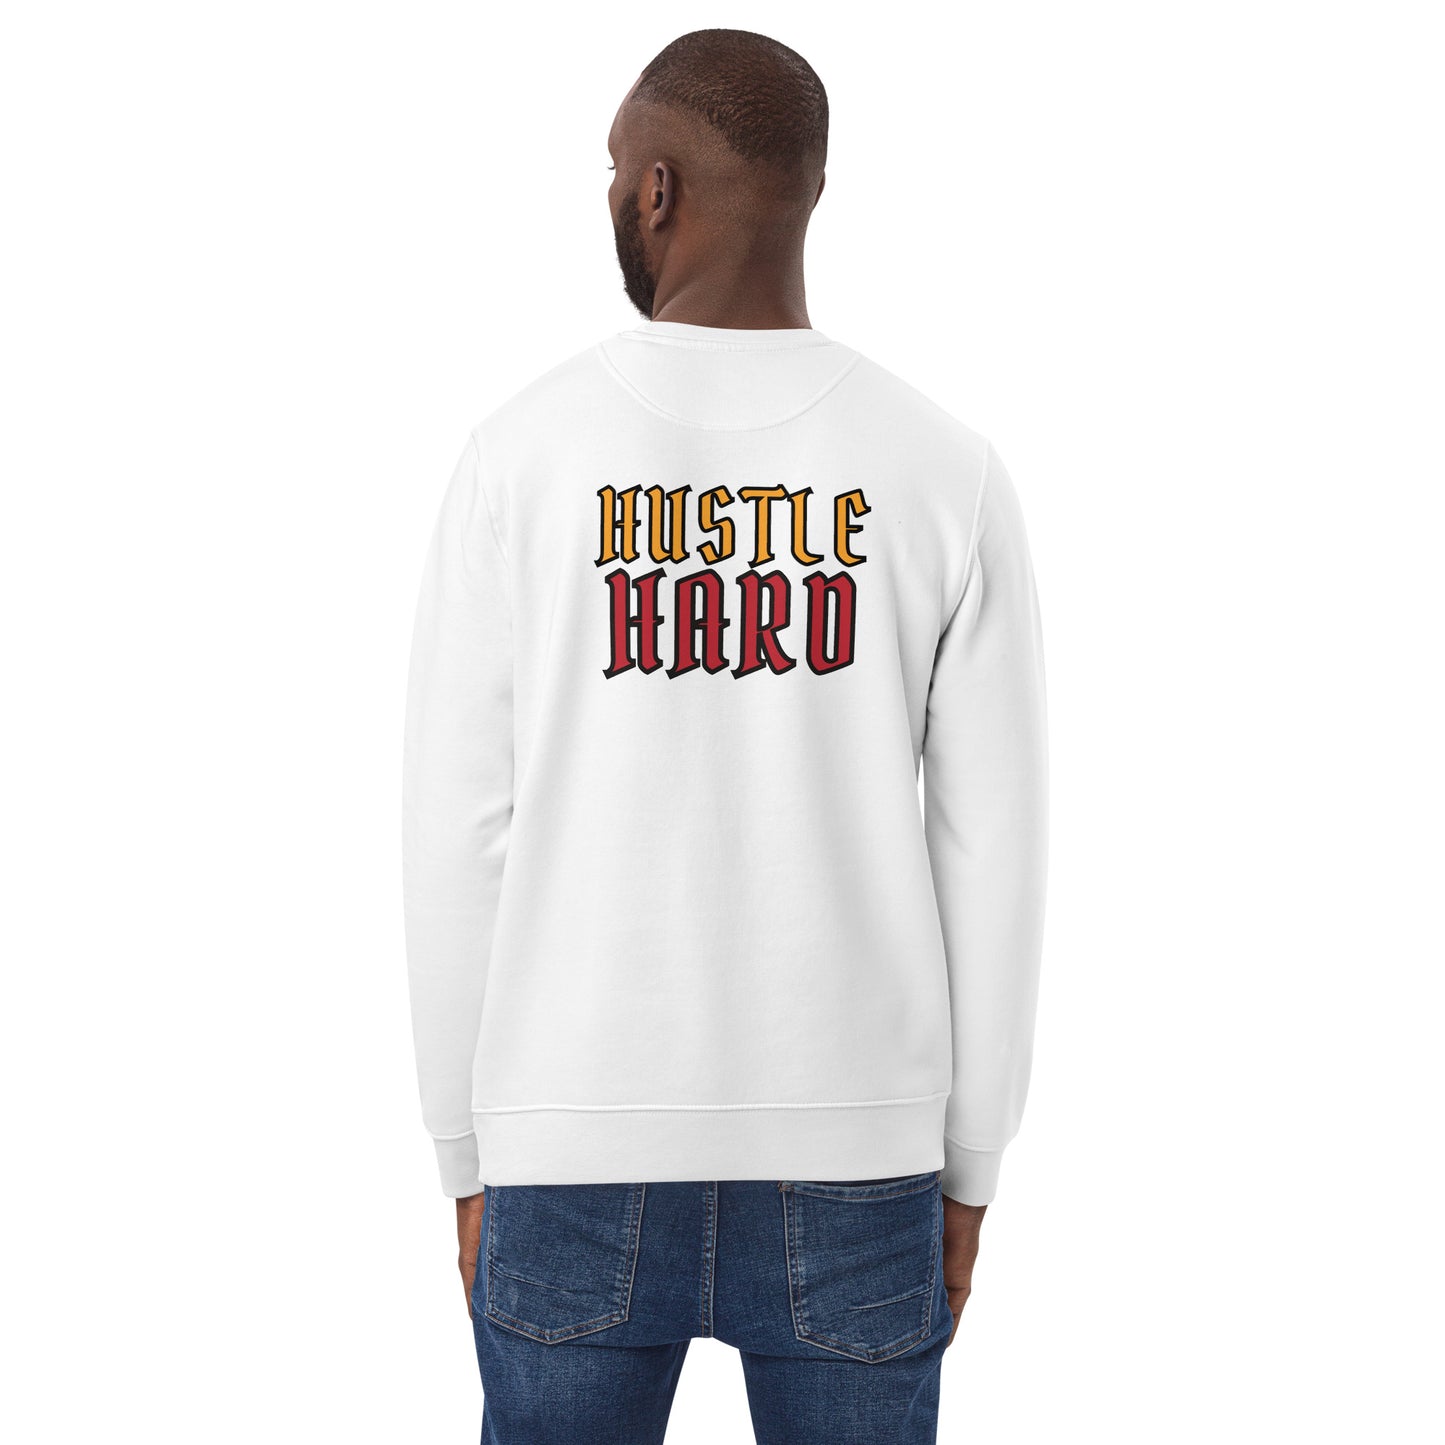 Hustle Hard and Nauti - Unisex eco sweatshirt